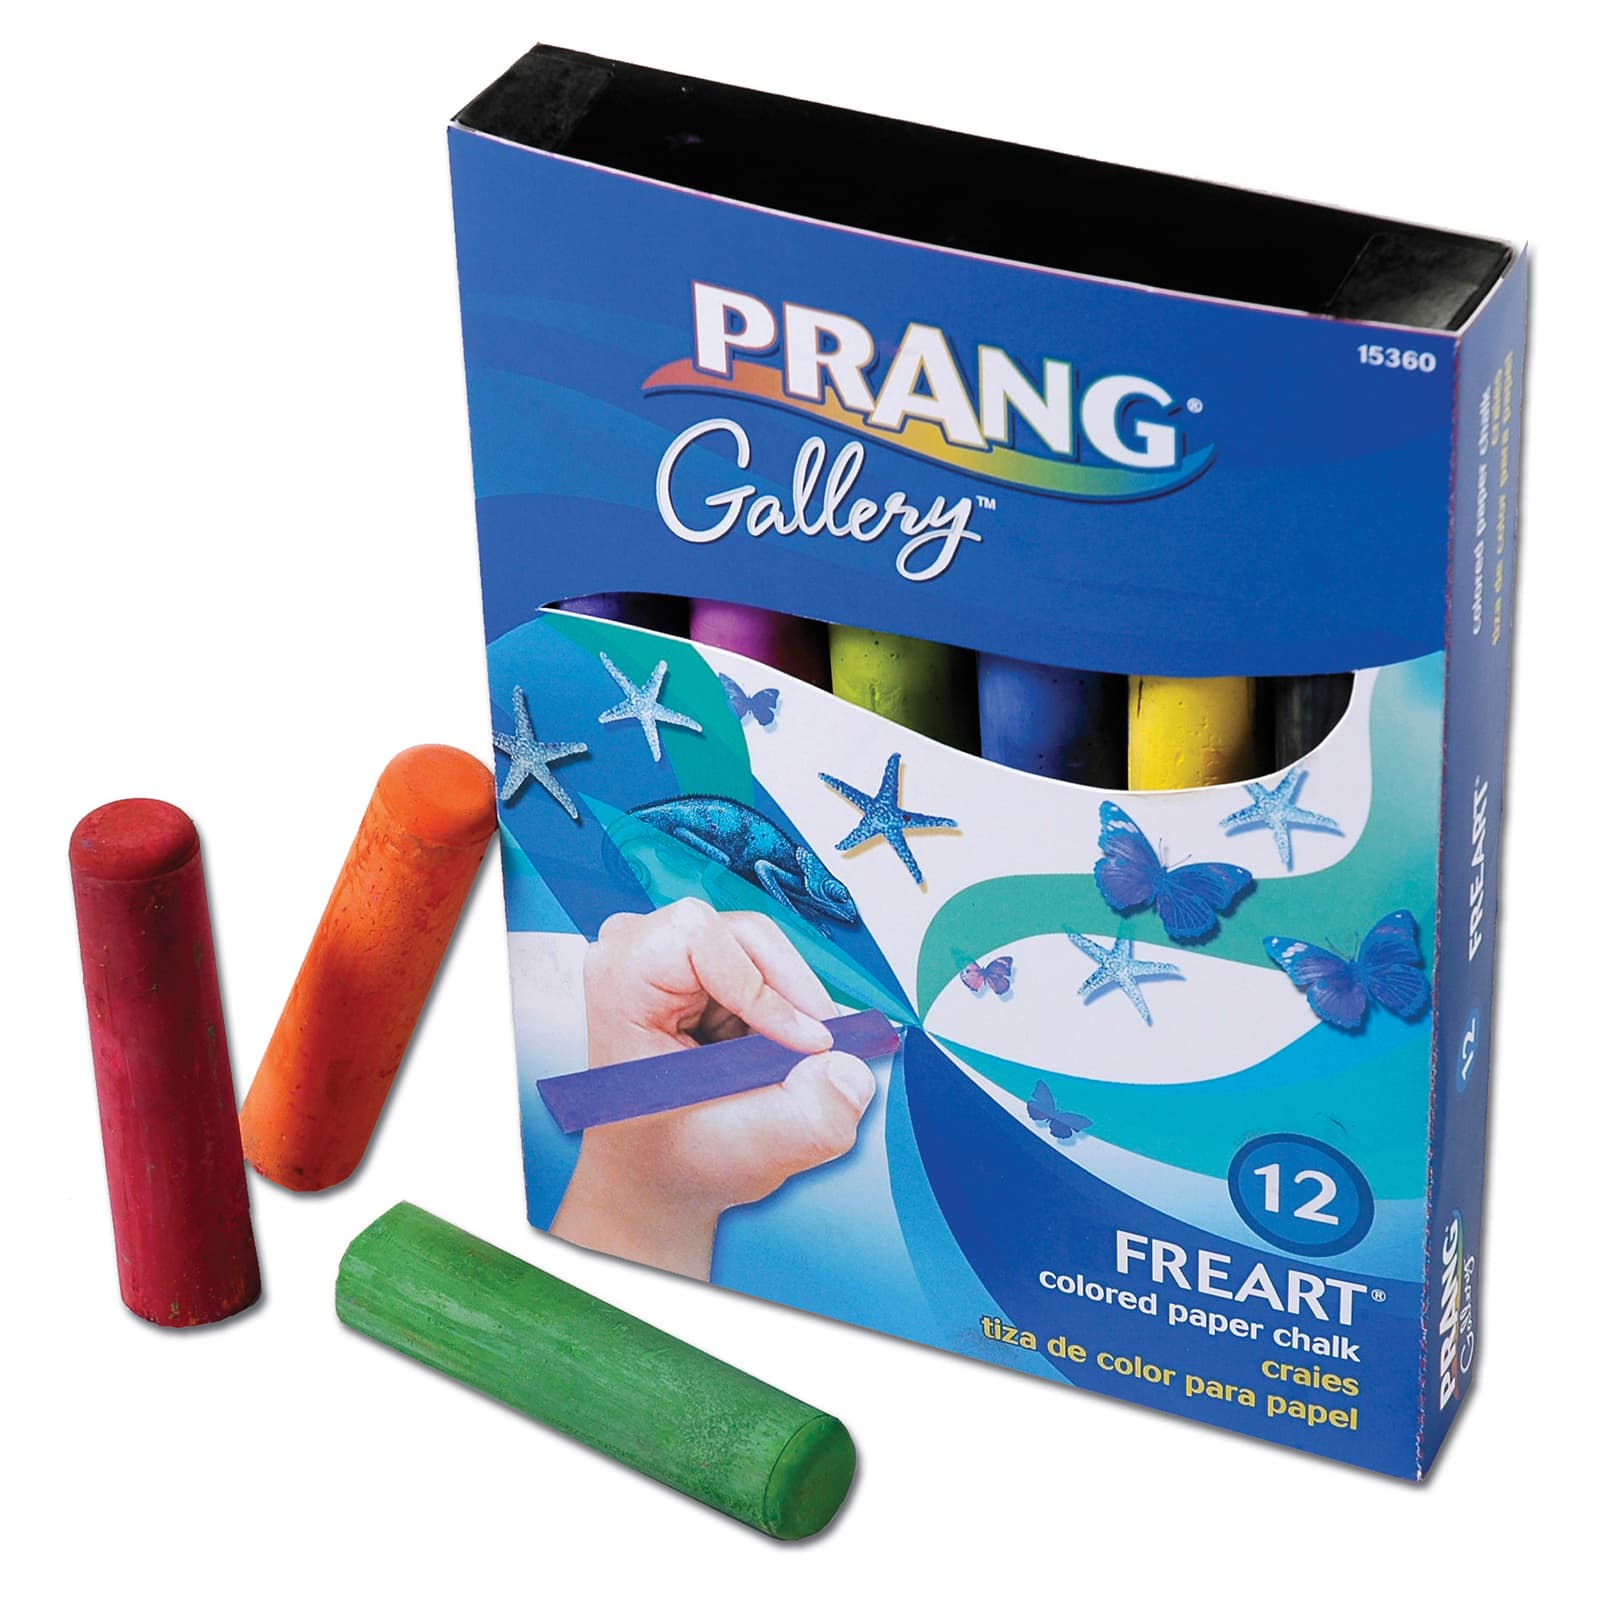 6 Packs: 12 ct. (72 total) Prang&#xAE; Freart&#xAE; Paper Chalk Set